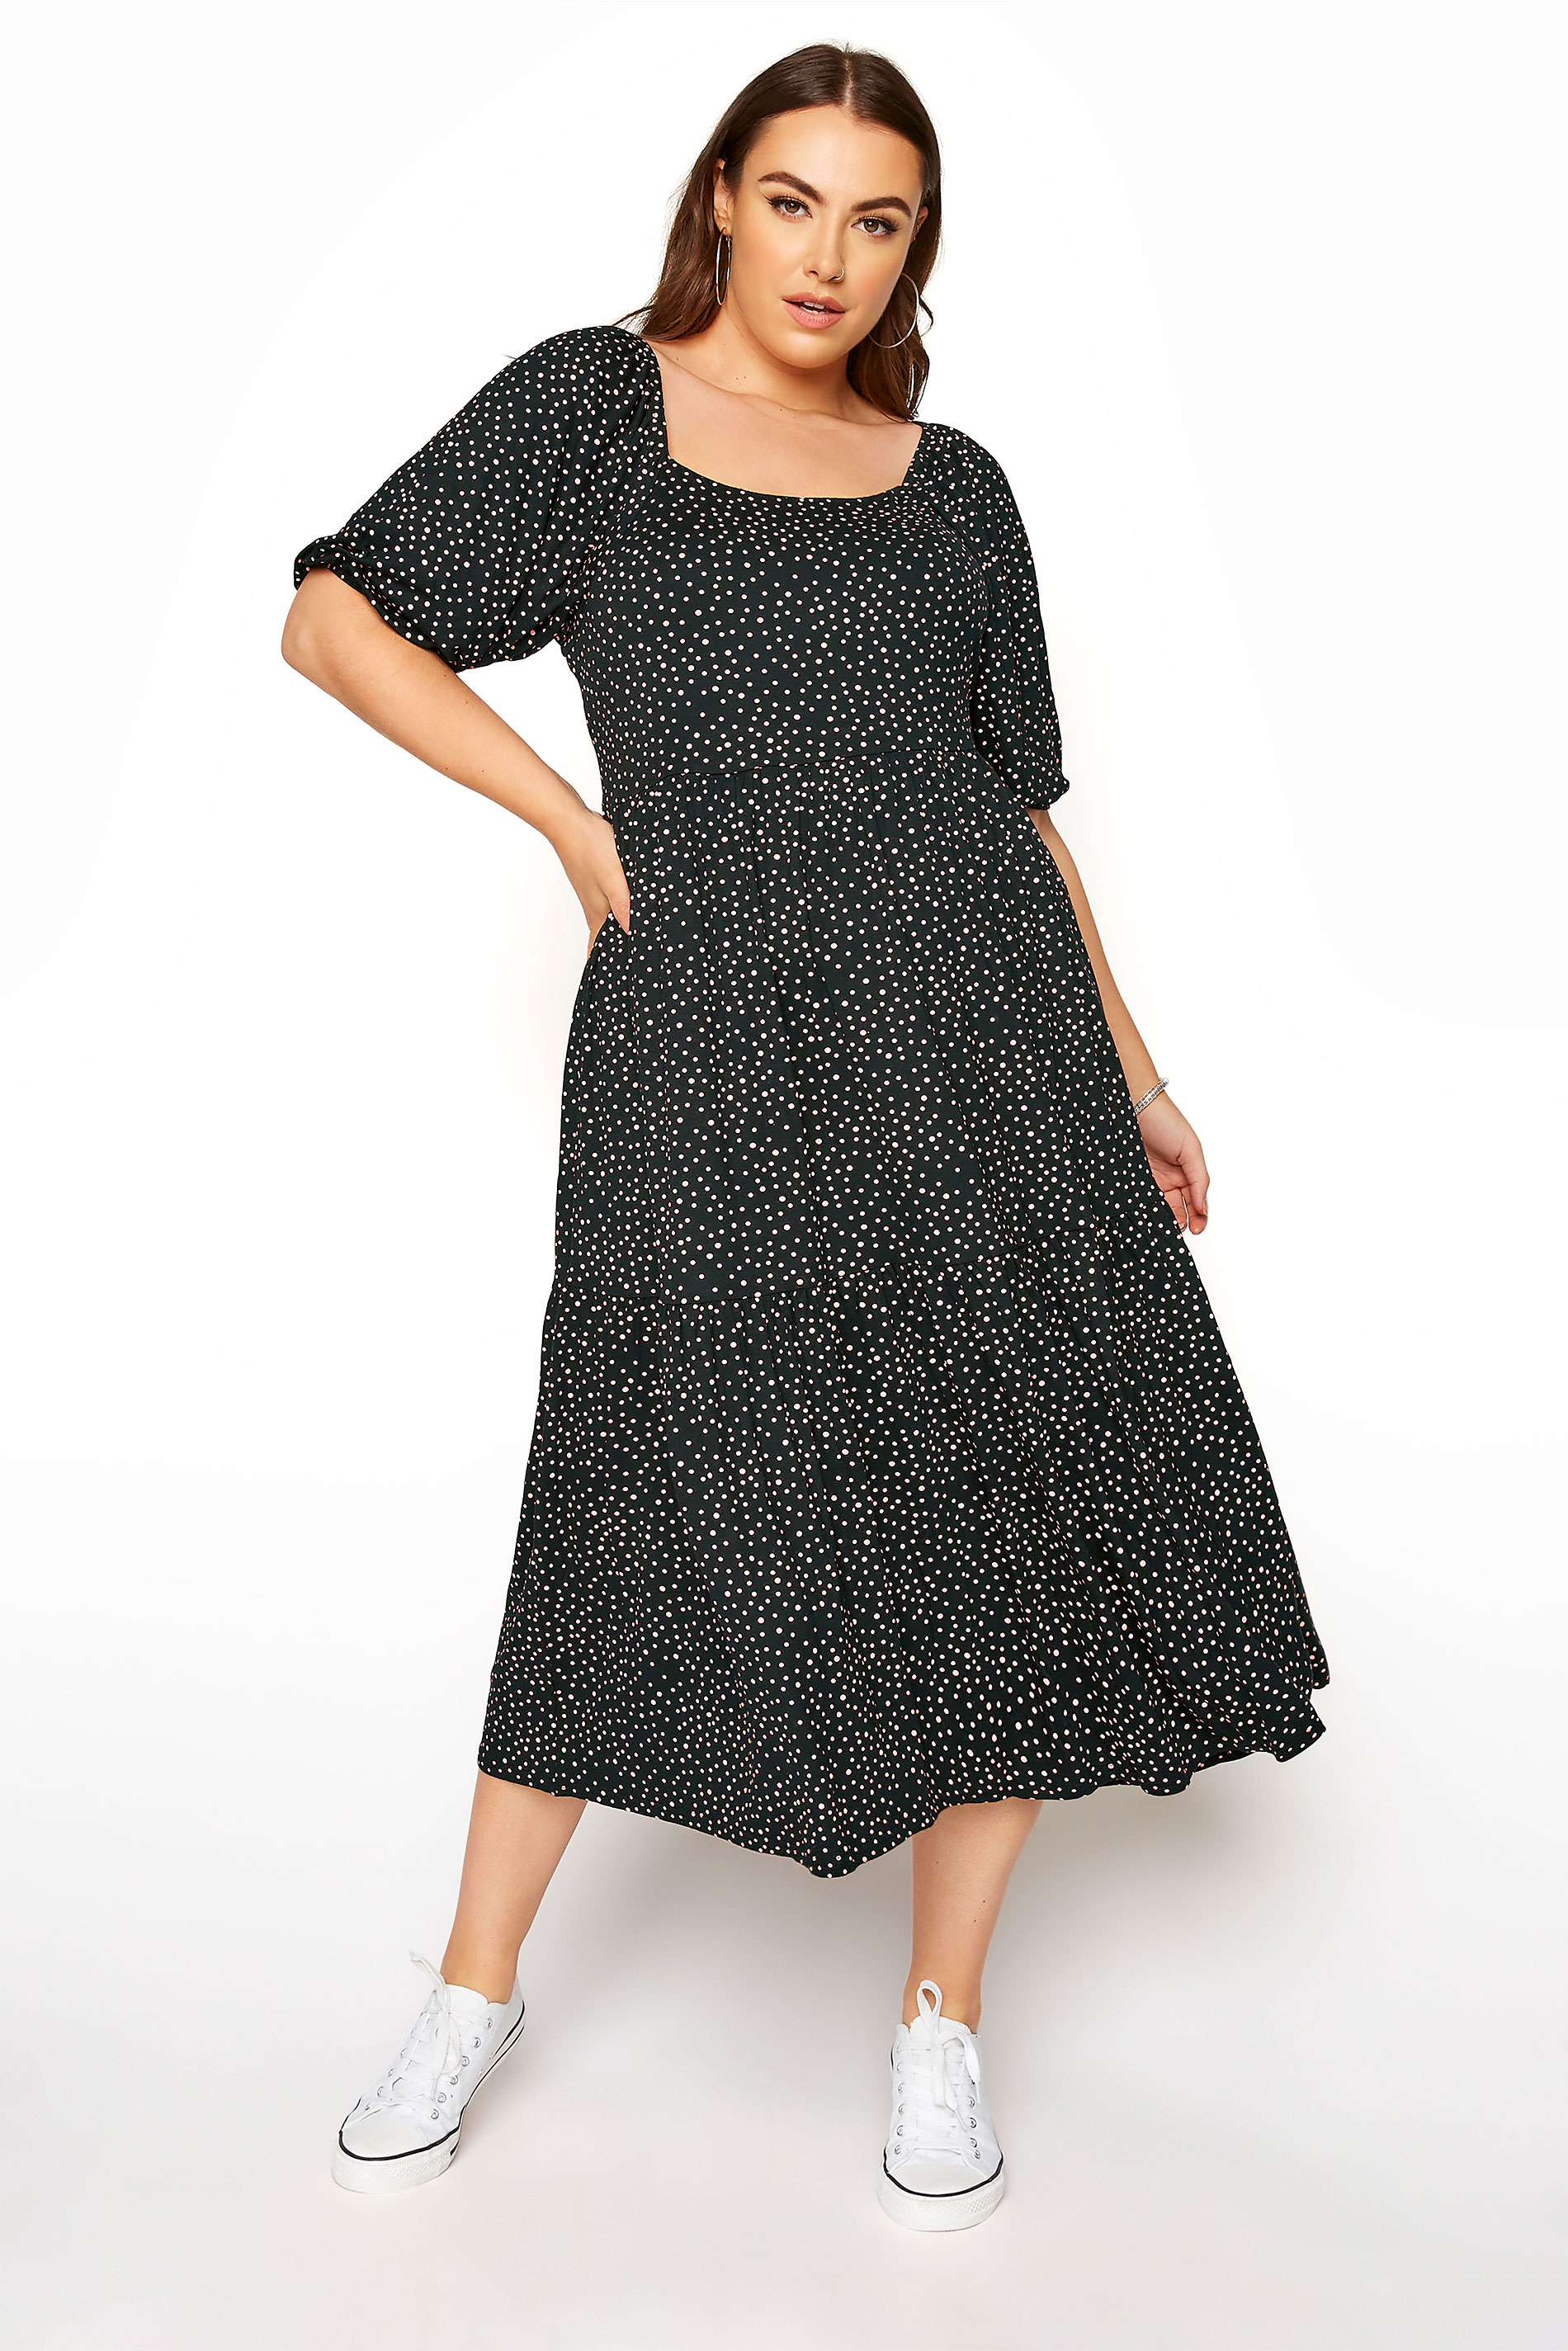 Black Polka Dot Square Neck Midaxi Dress Yours Clothing 0862